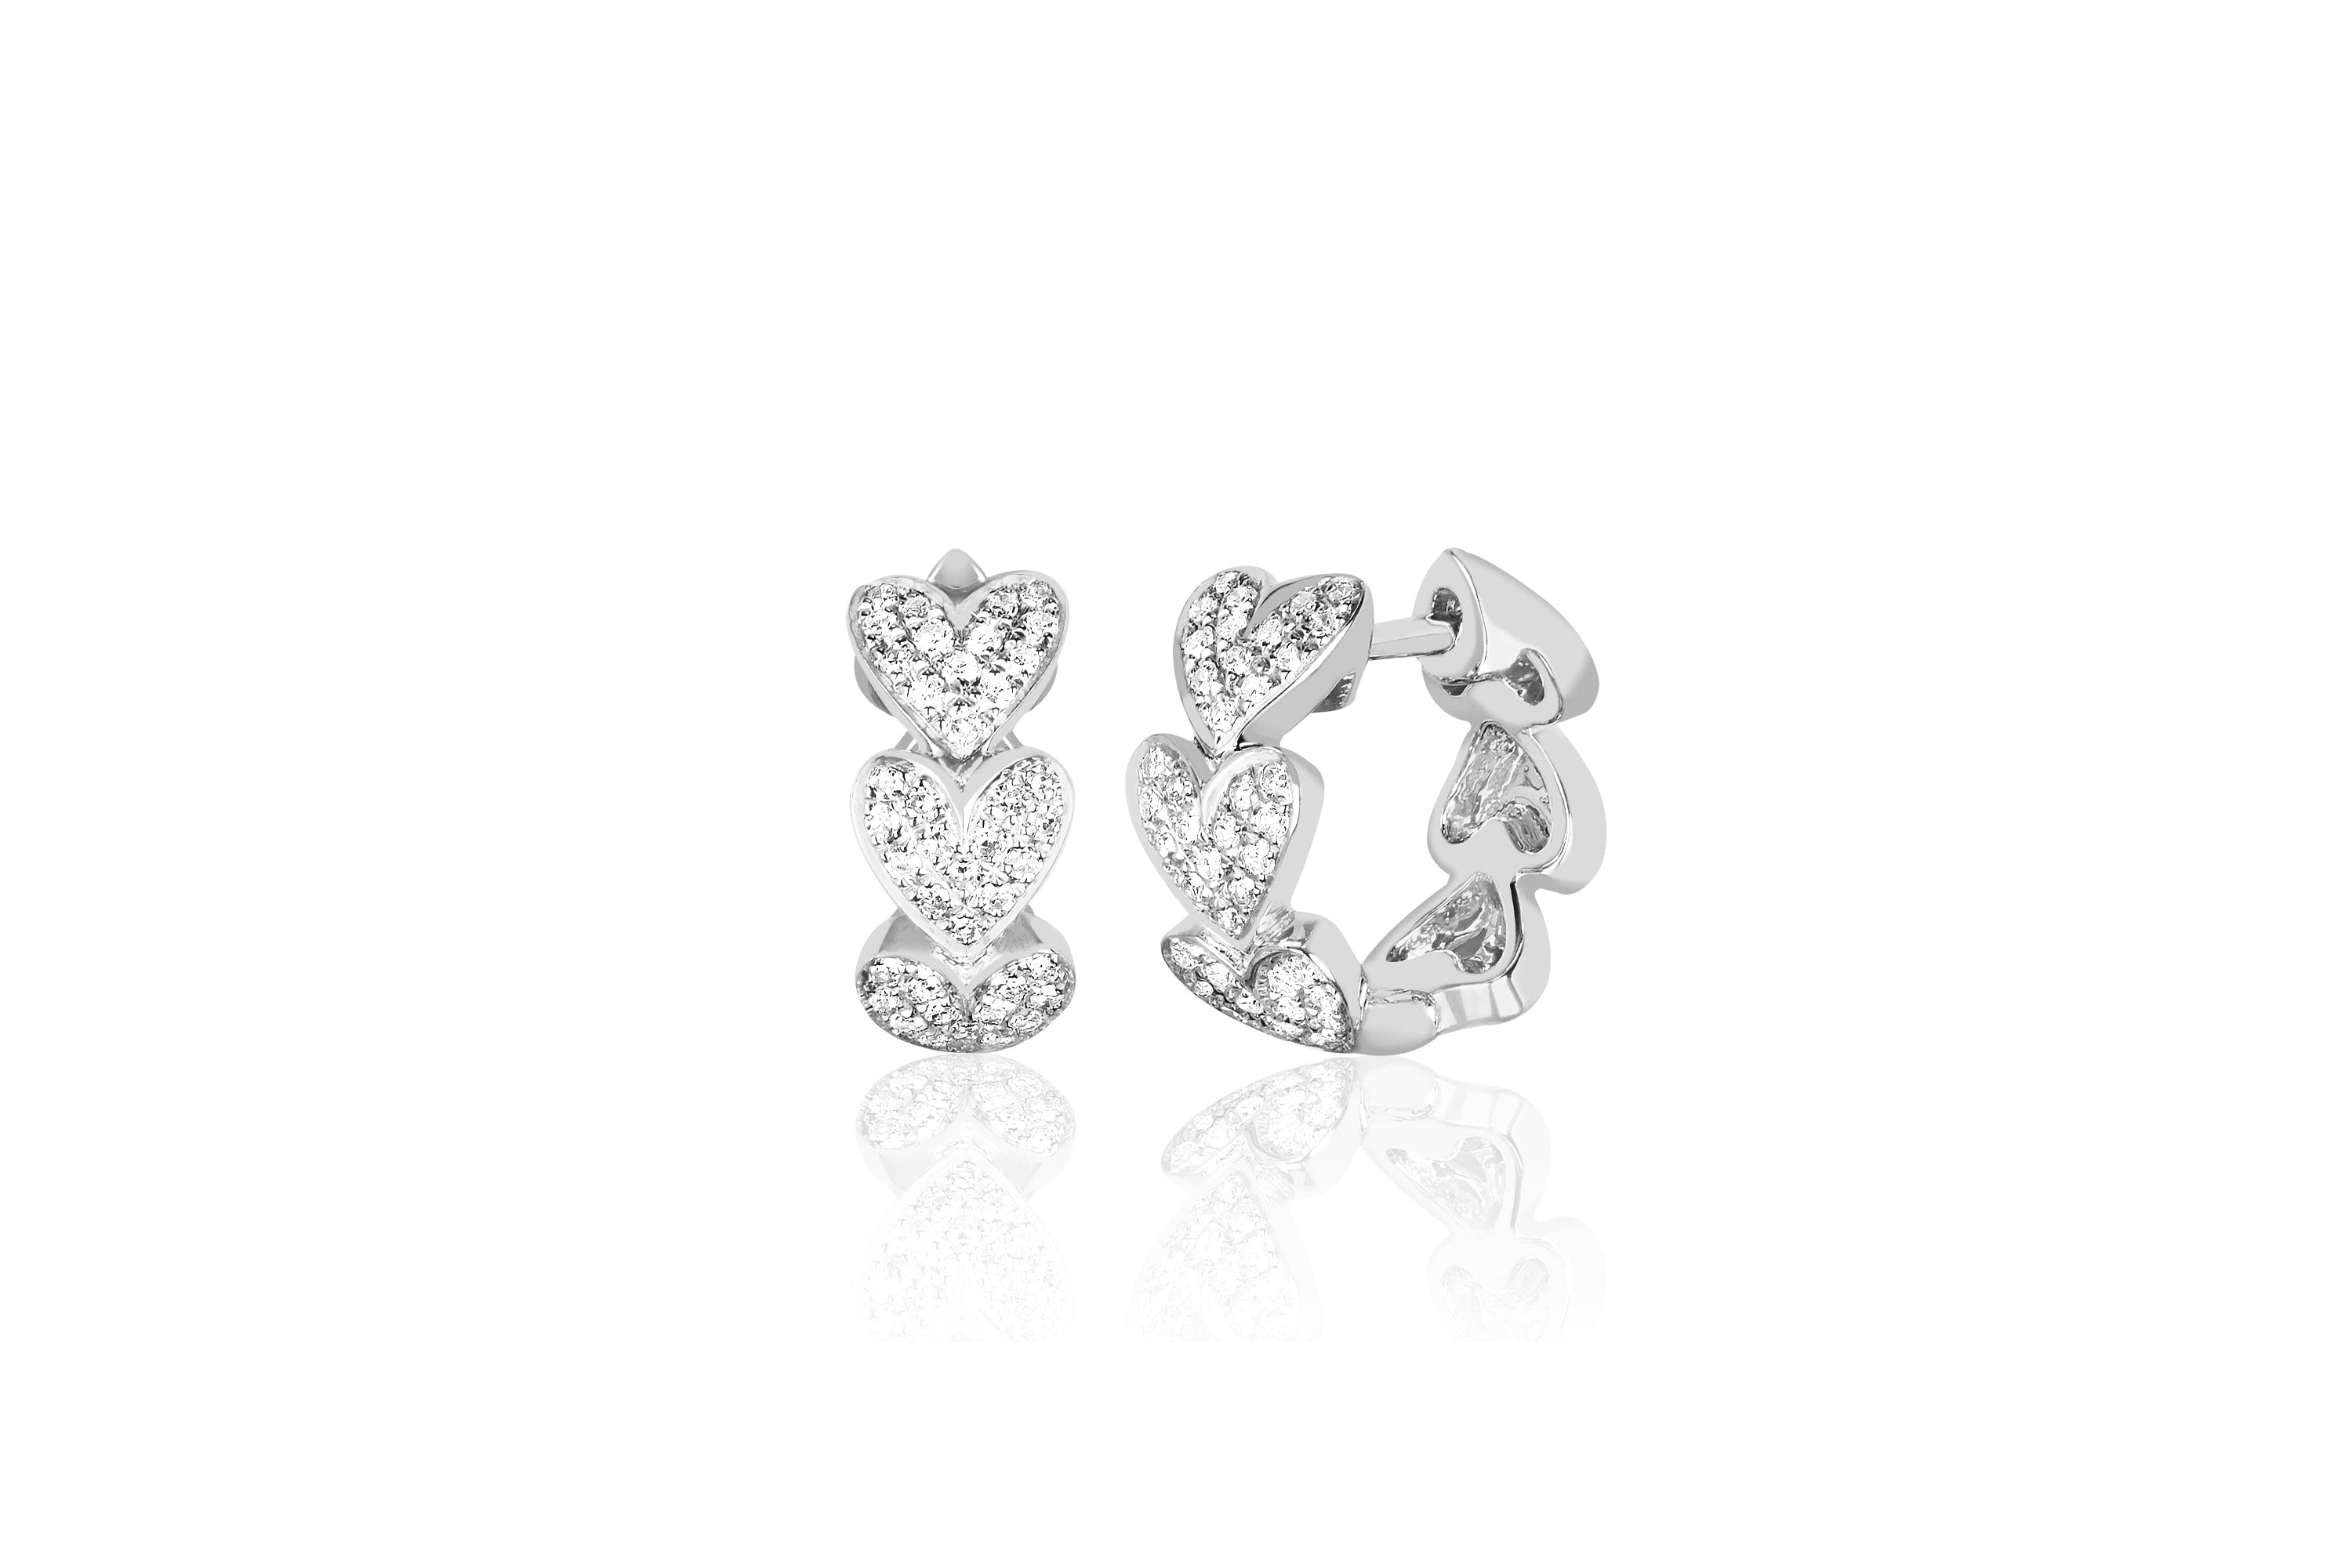 14k (karat) white gold huggie earring with multiple heart pendants encrusted in diamonds. Each heart measuring 5 mm.